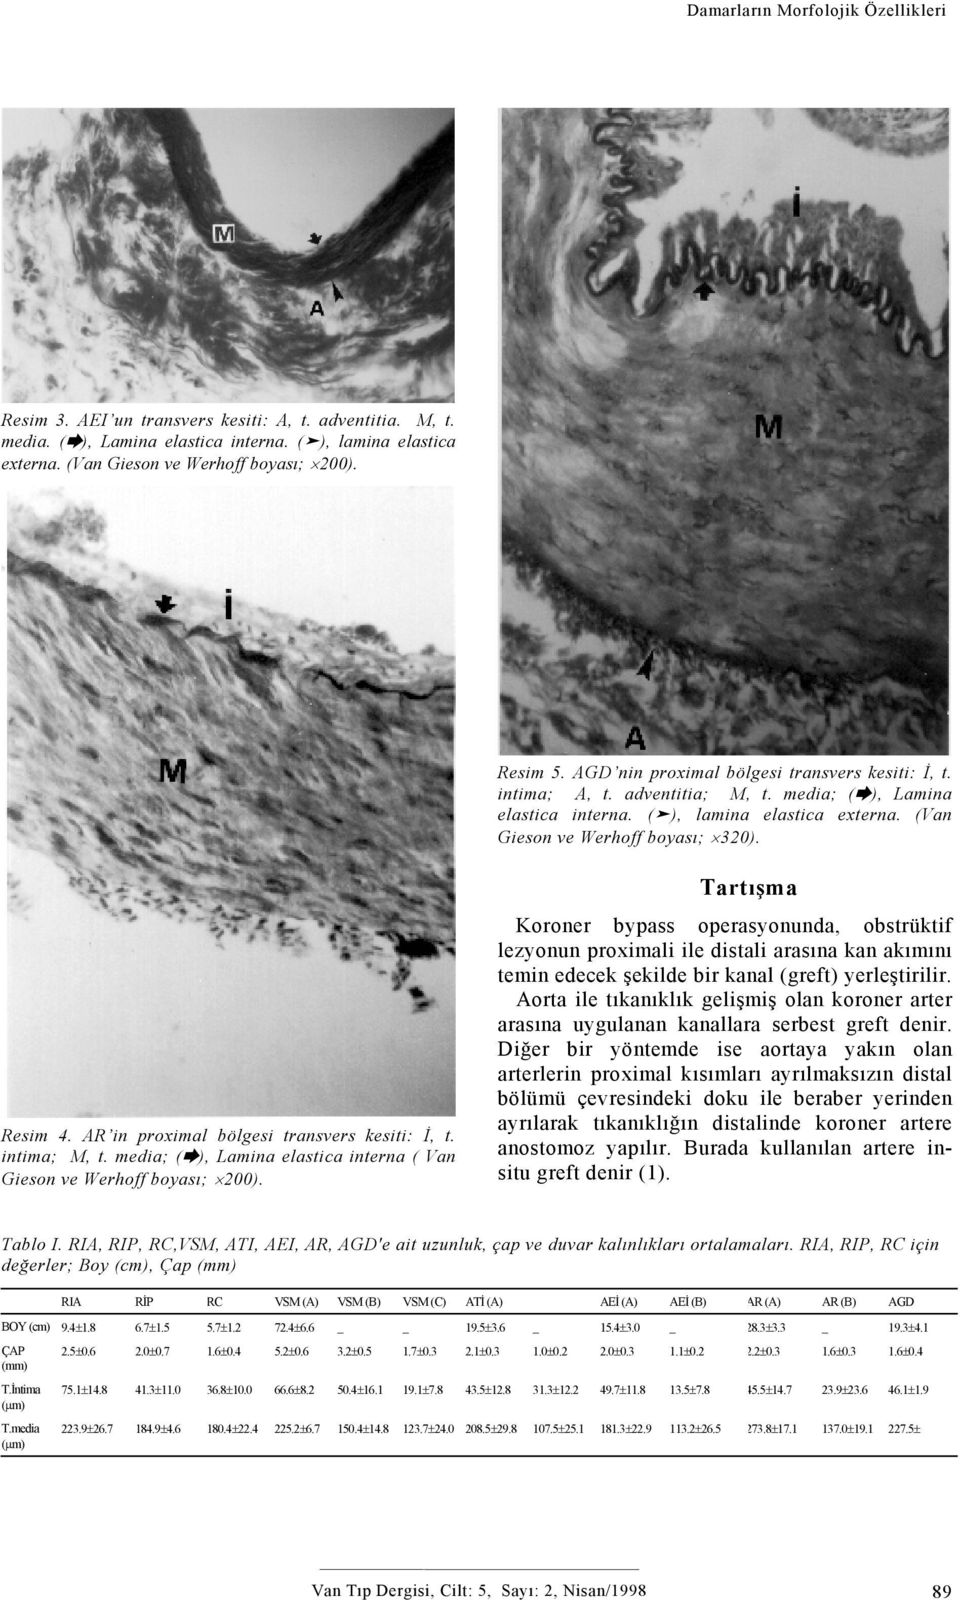 Resim 4. AR in proximal bölgesi transvers kesiti: İ, t. intima; M, t. media; ( ), Lamina elastica interna ( Van Gieson ve Werhoff boyası; 200).